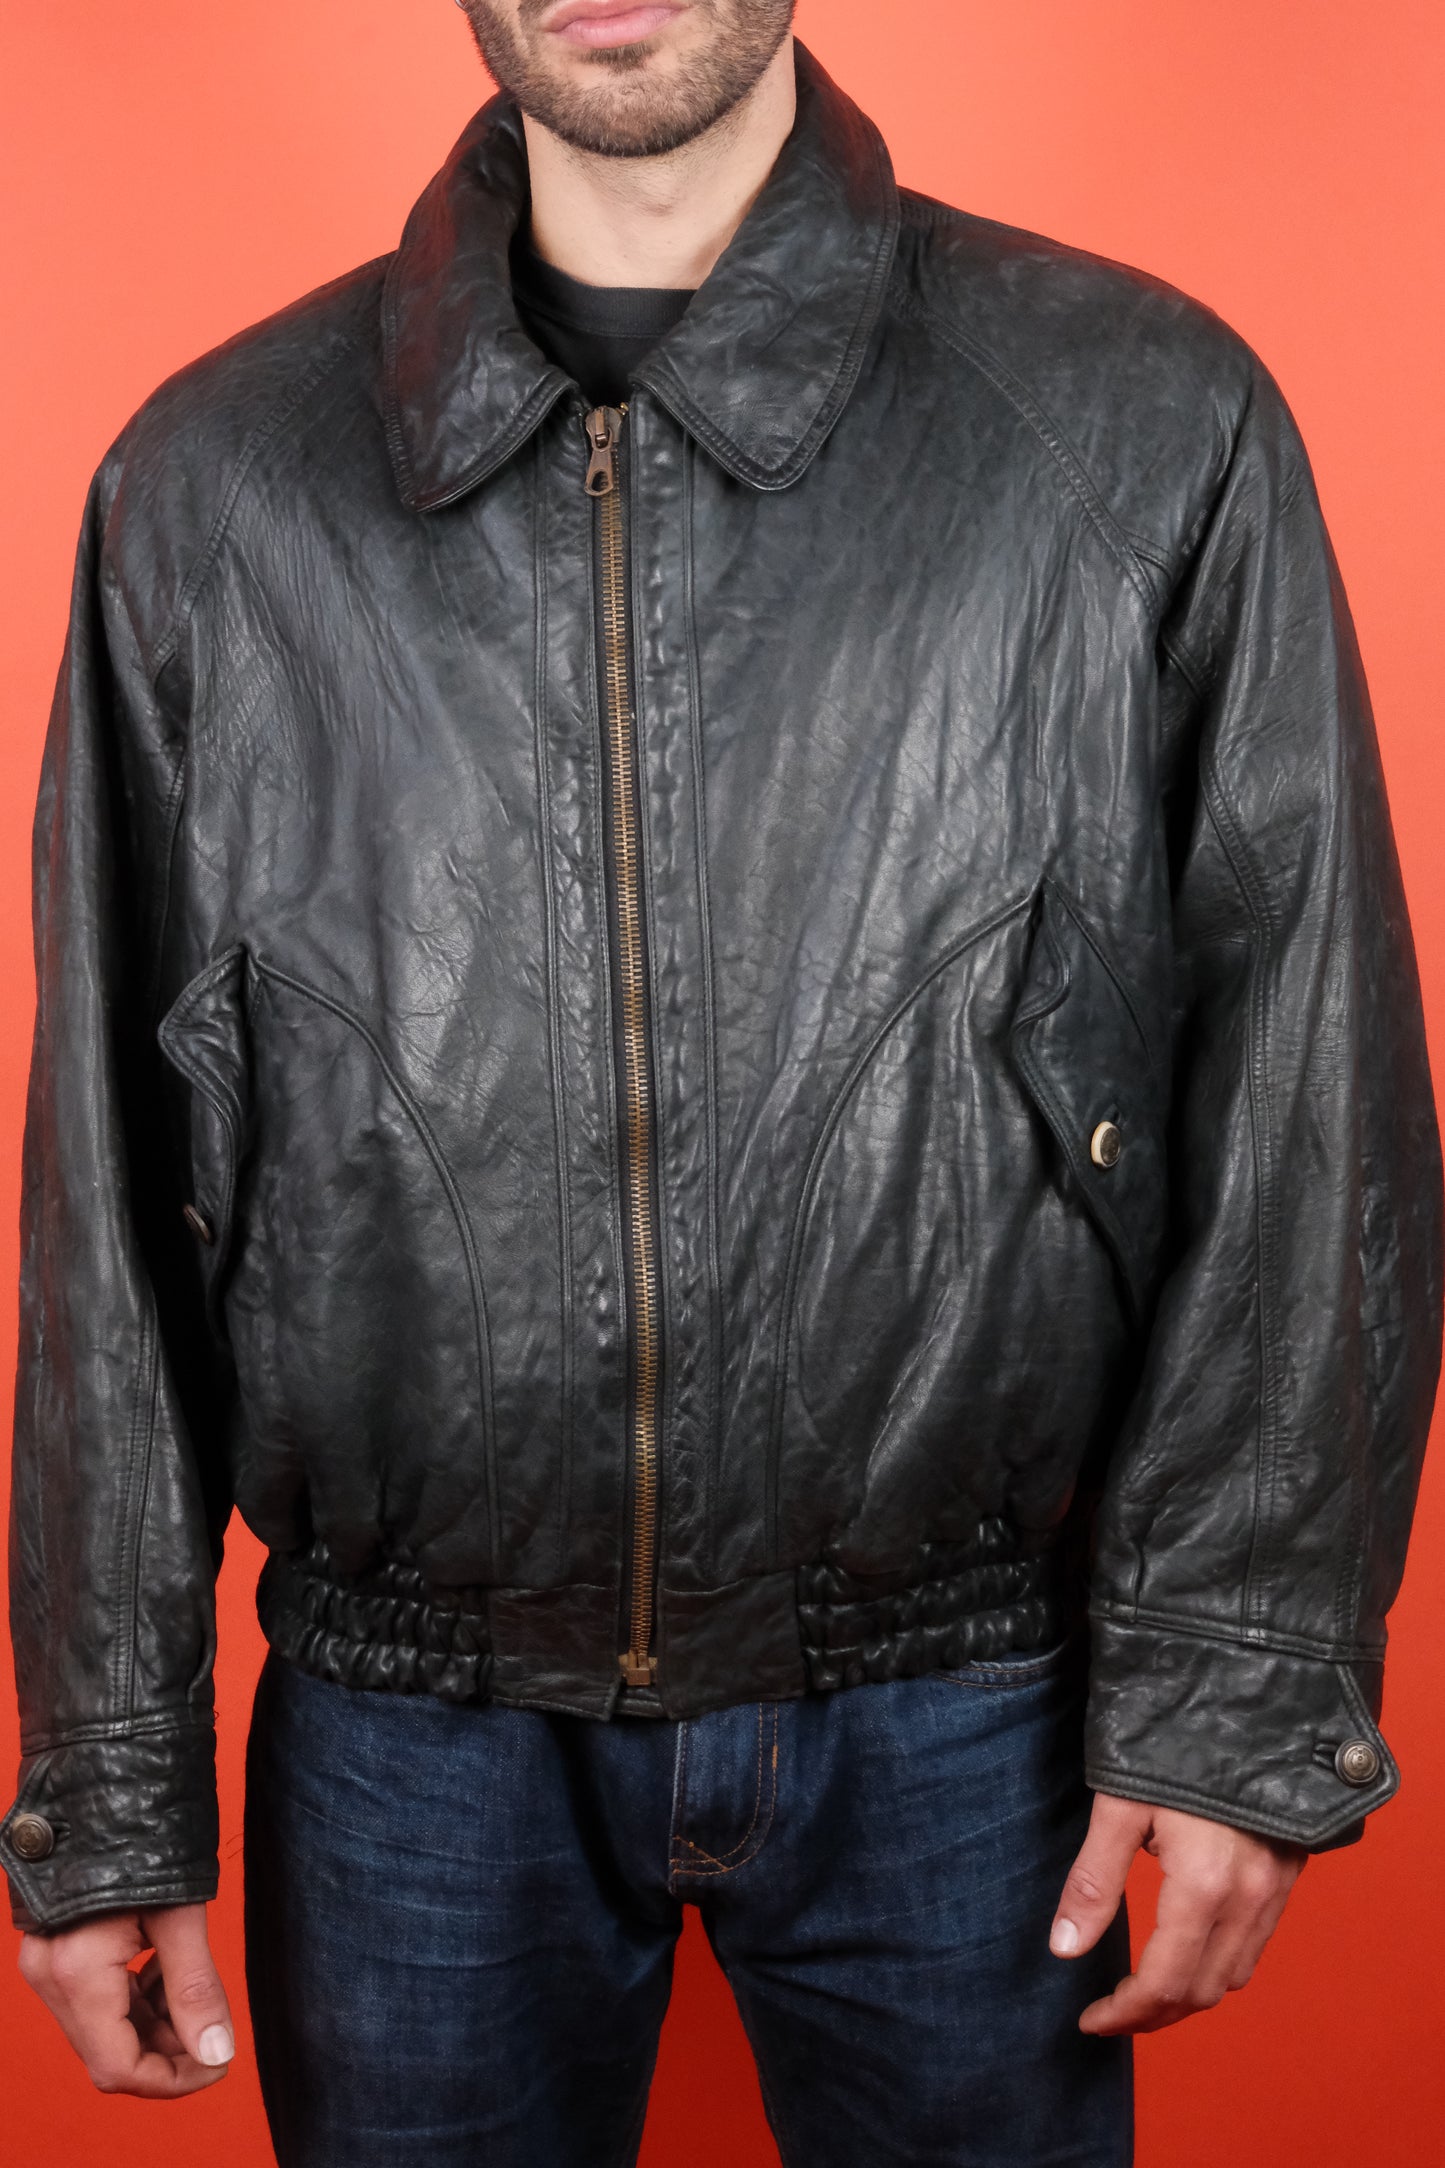 Hugo Boss Leather Jacket 'L/52' - vintage clothing clochard92.com